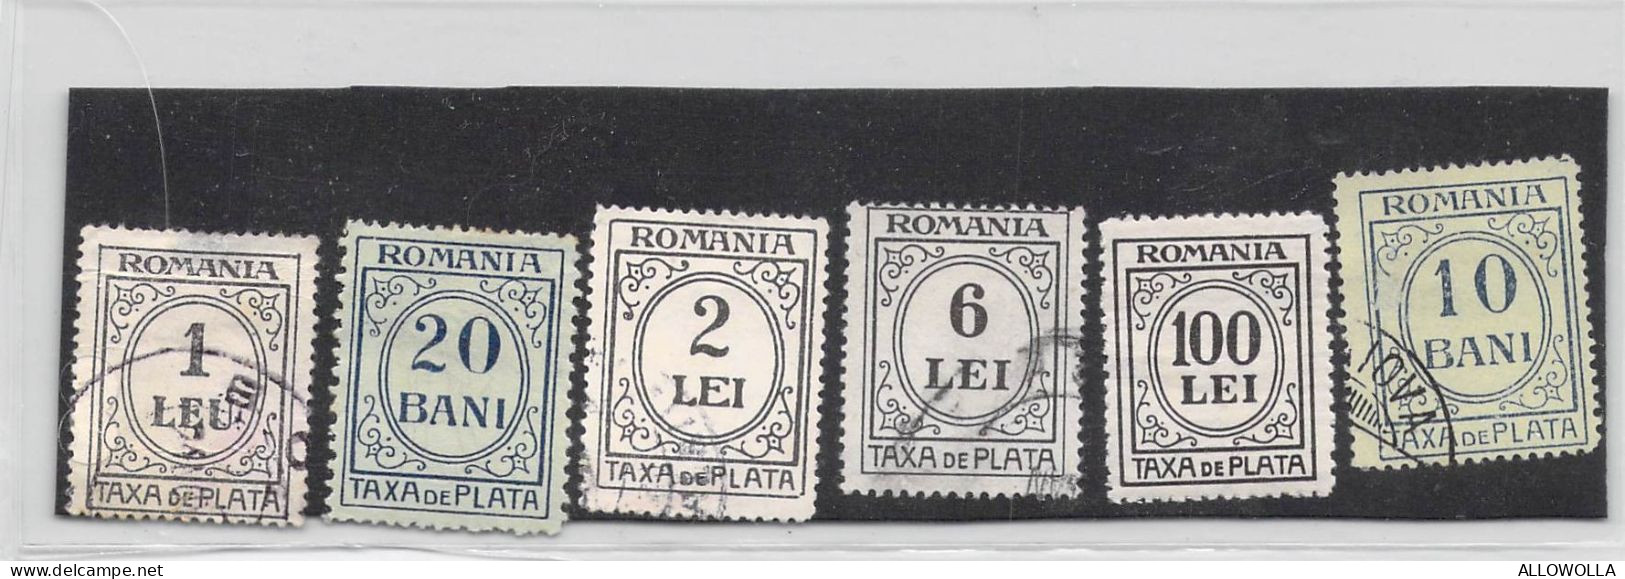 22186 " ROMANIA-TAXA DE PLATA-6 VALORI "  1 LEU E 20 BANI LINGUELLATI - Impuestos